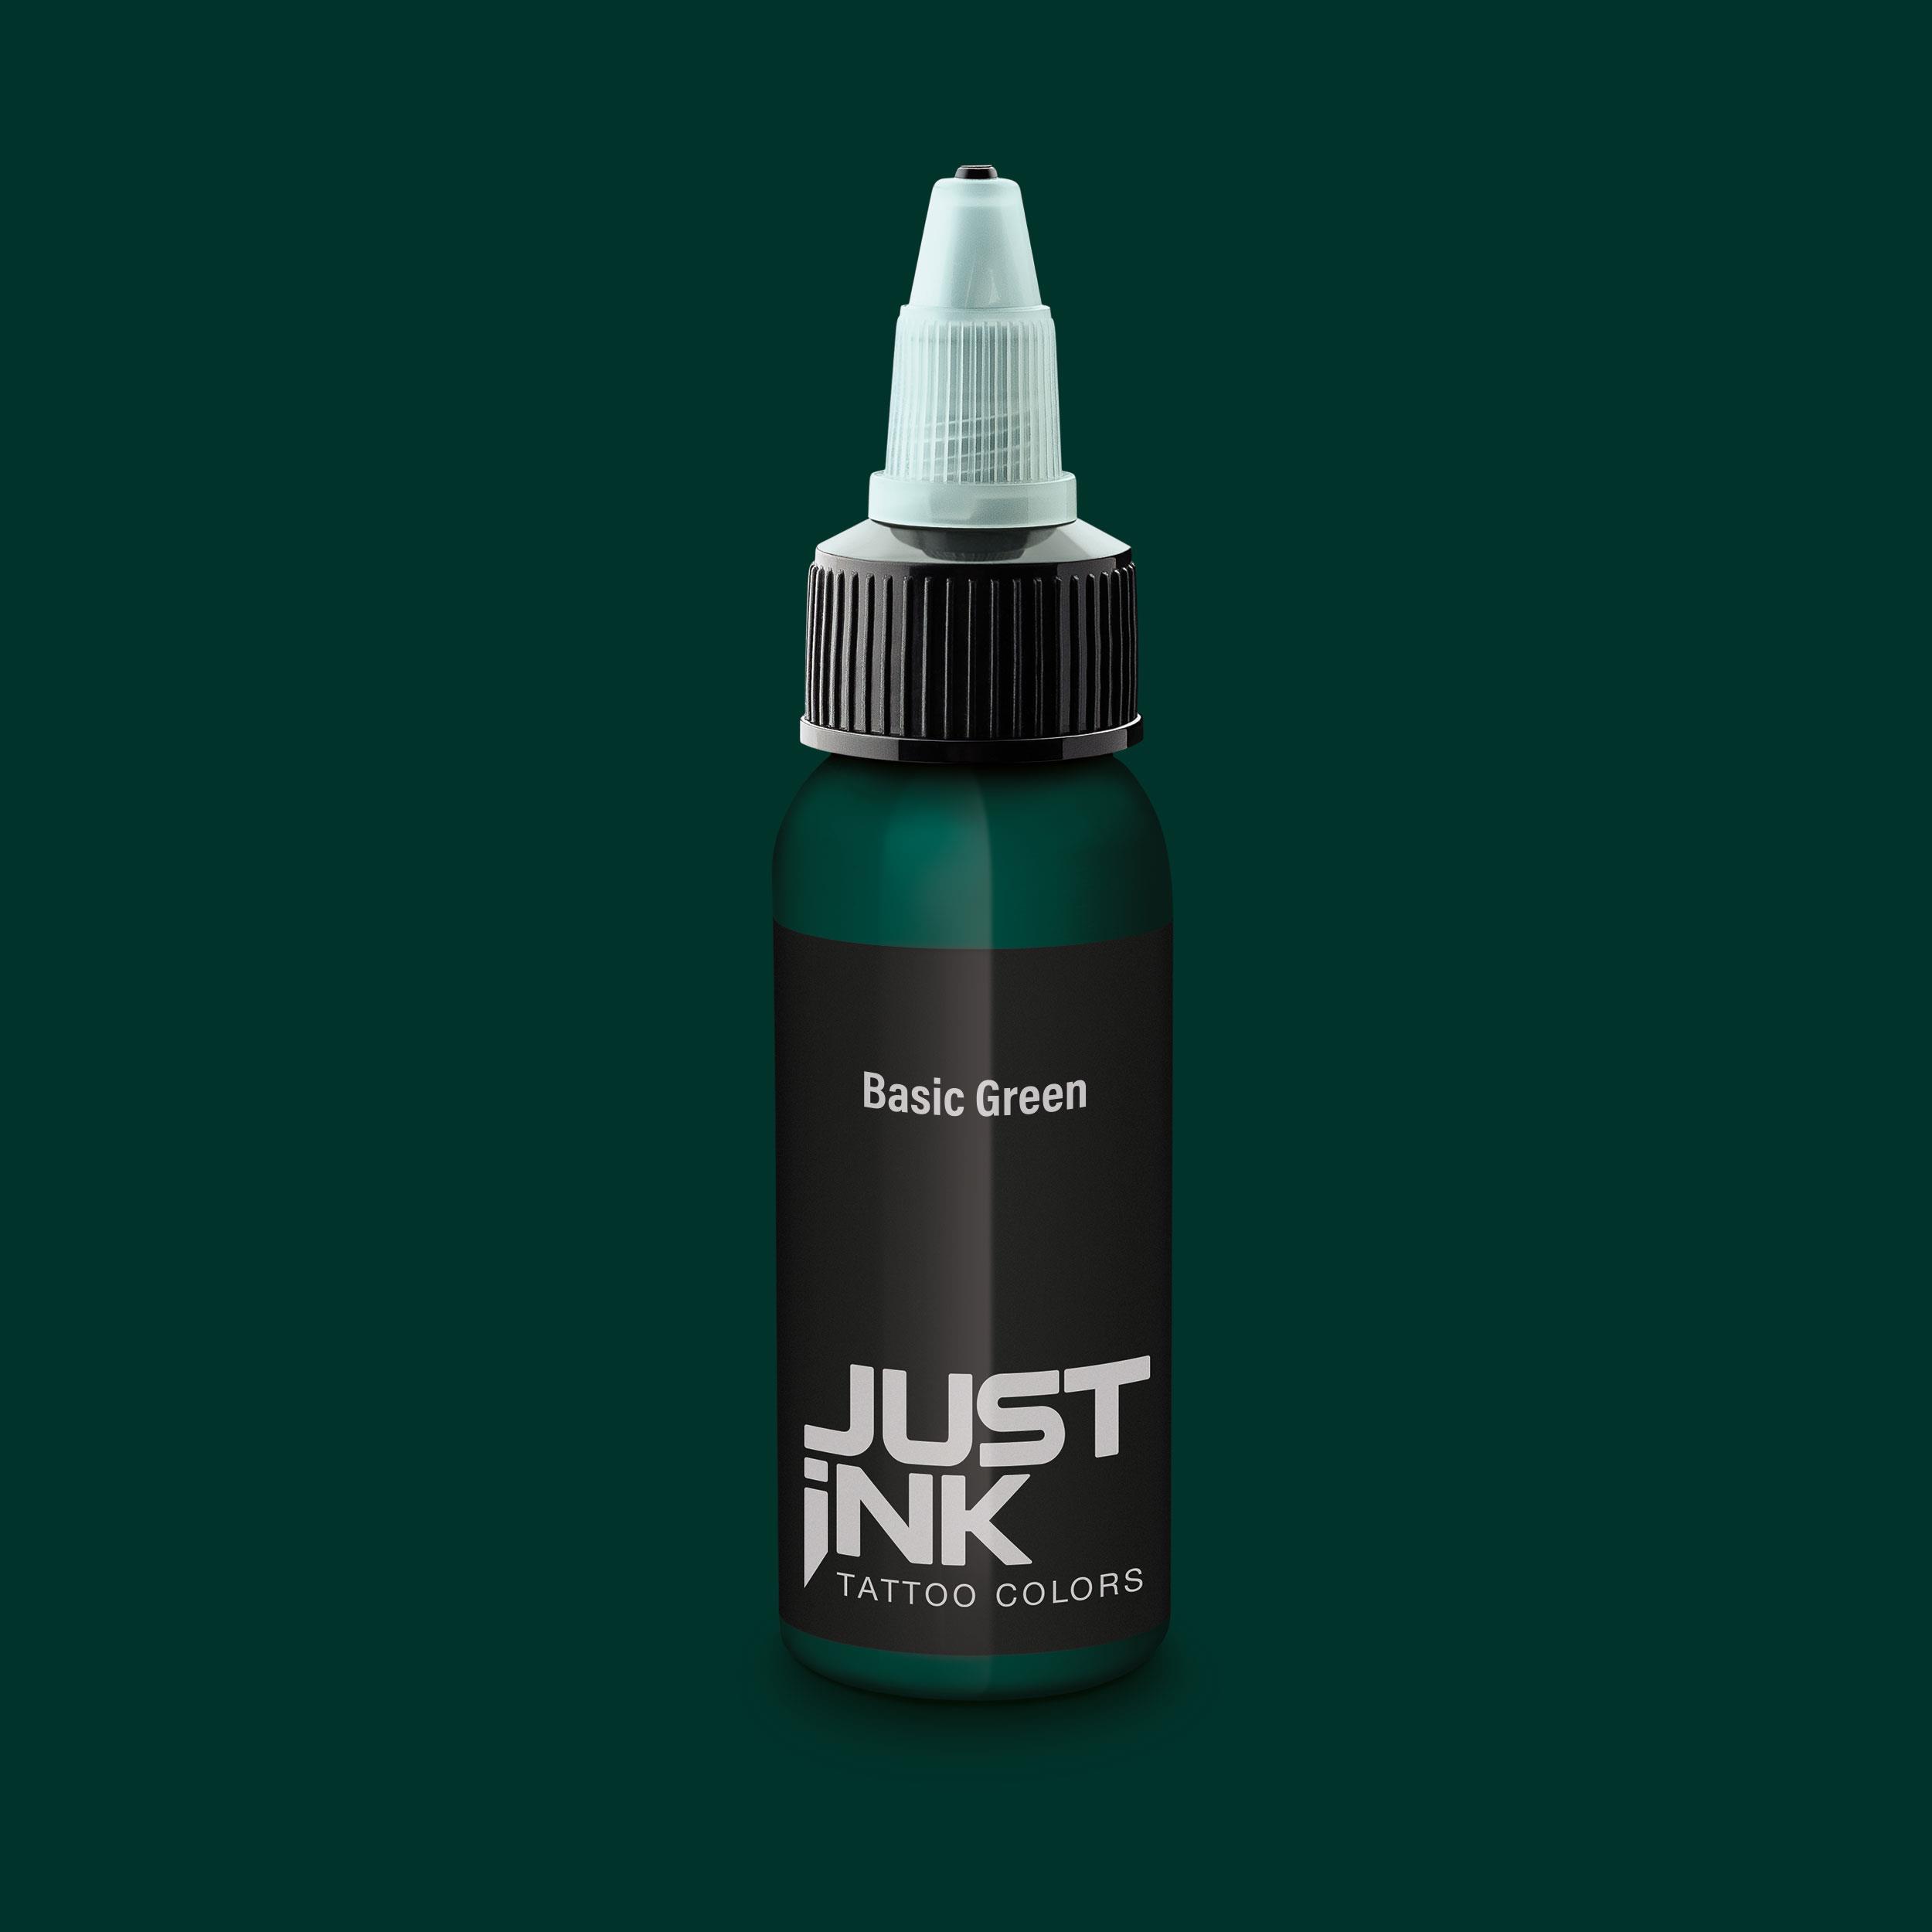 Just Ink - Tattoo Farbe - Basic Green - 30 ml